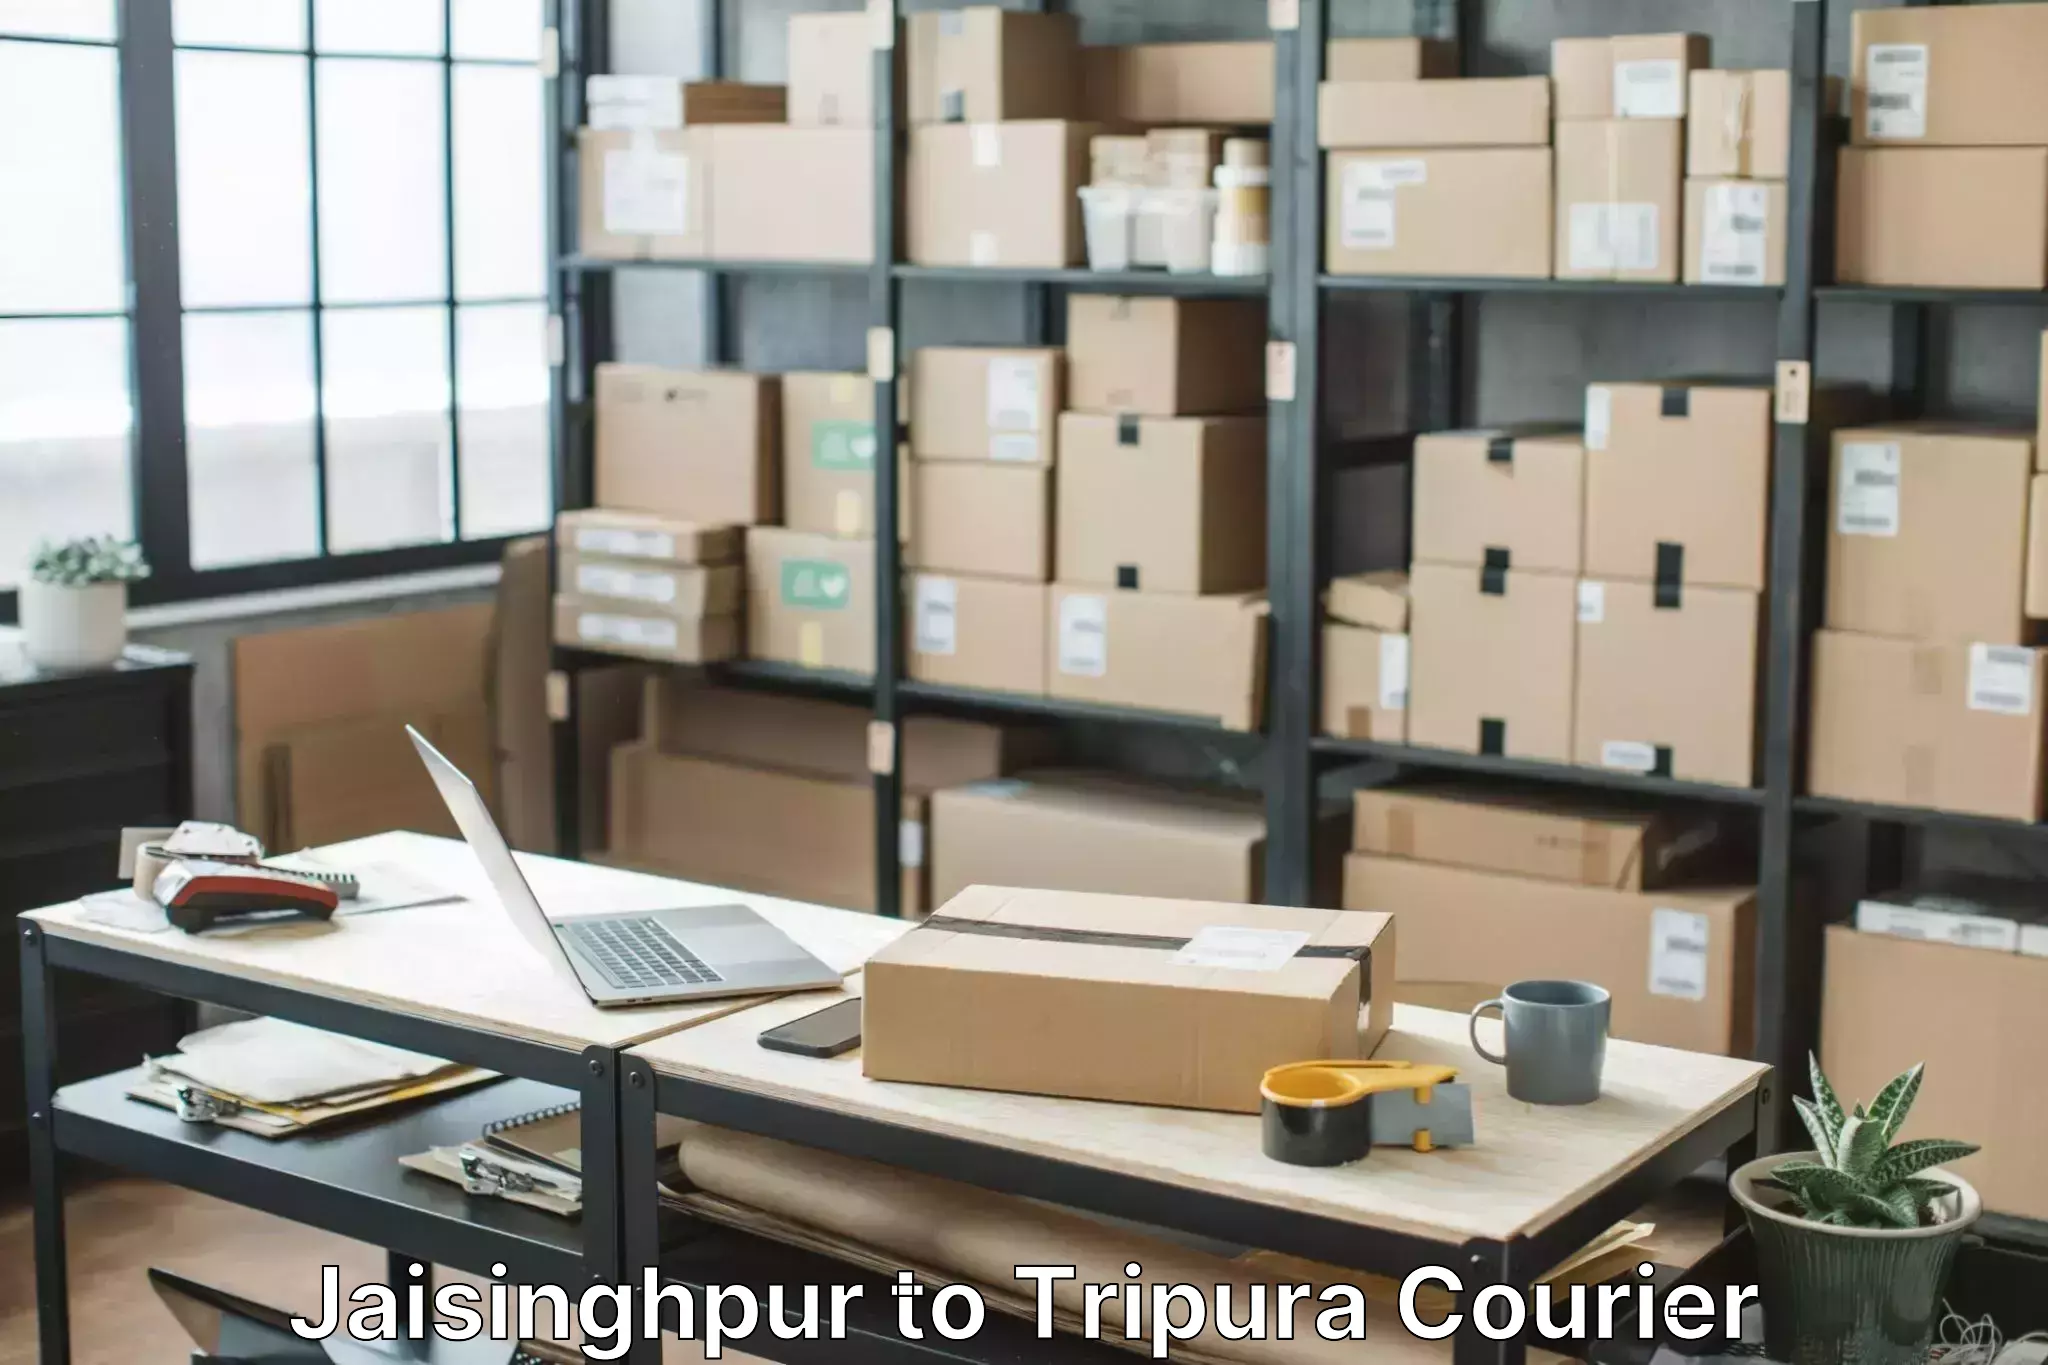 Quality relocation assistance in Jaisinghpur to Udaipur Tripura